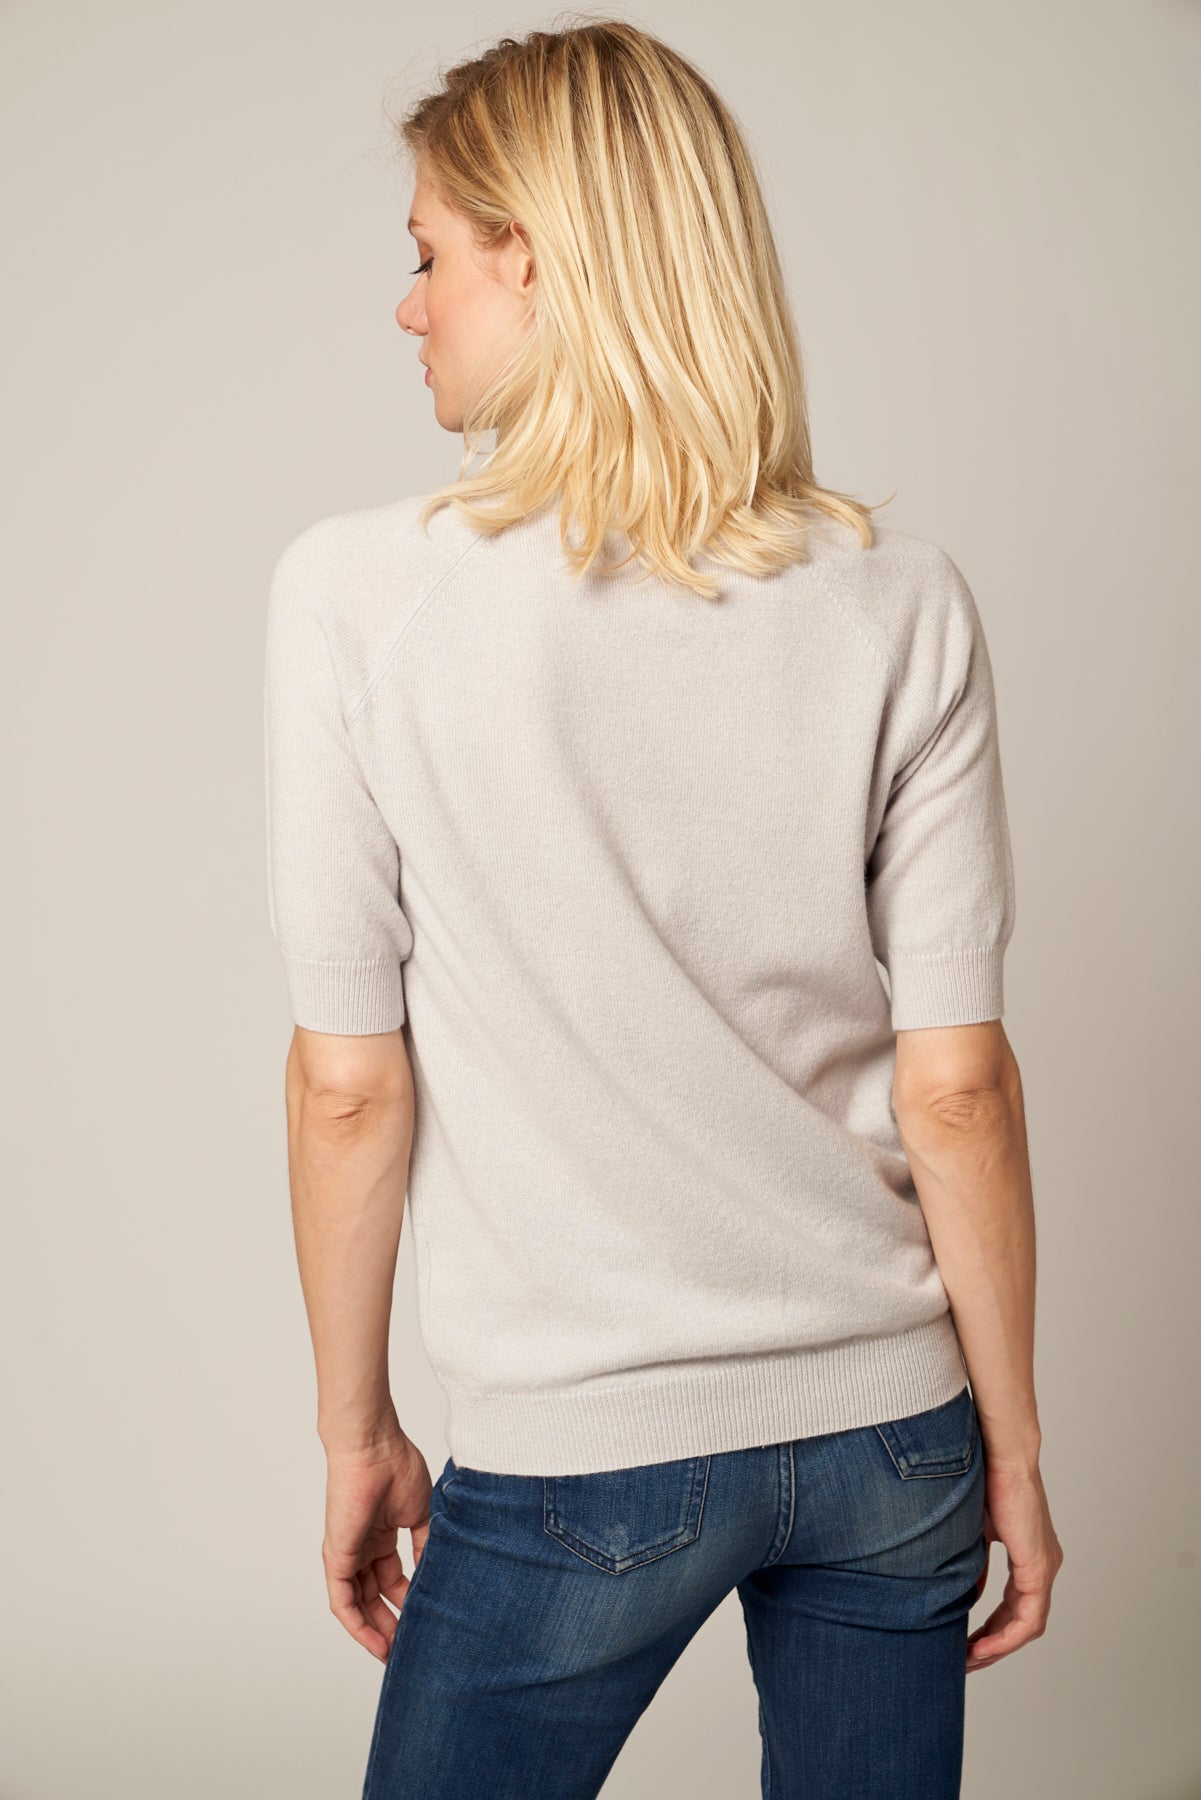 Short Sleeve Mock Neck Cashmere Sweater [CV007] - $189.00